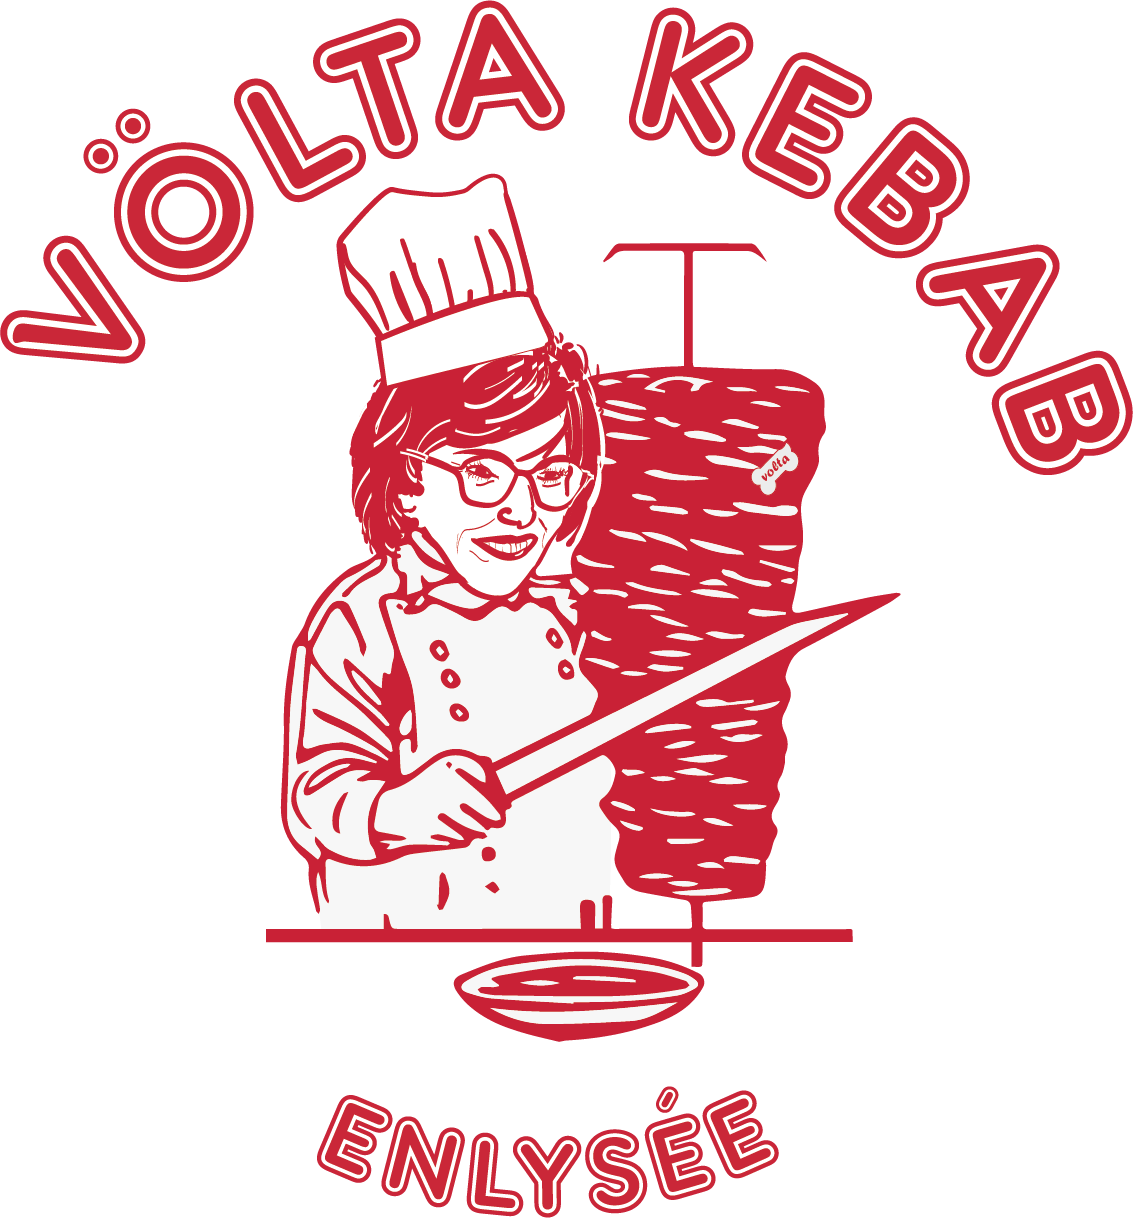 Le mug Volta Kebab